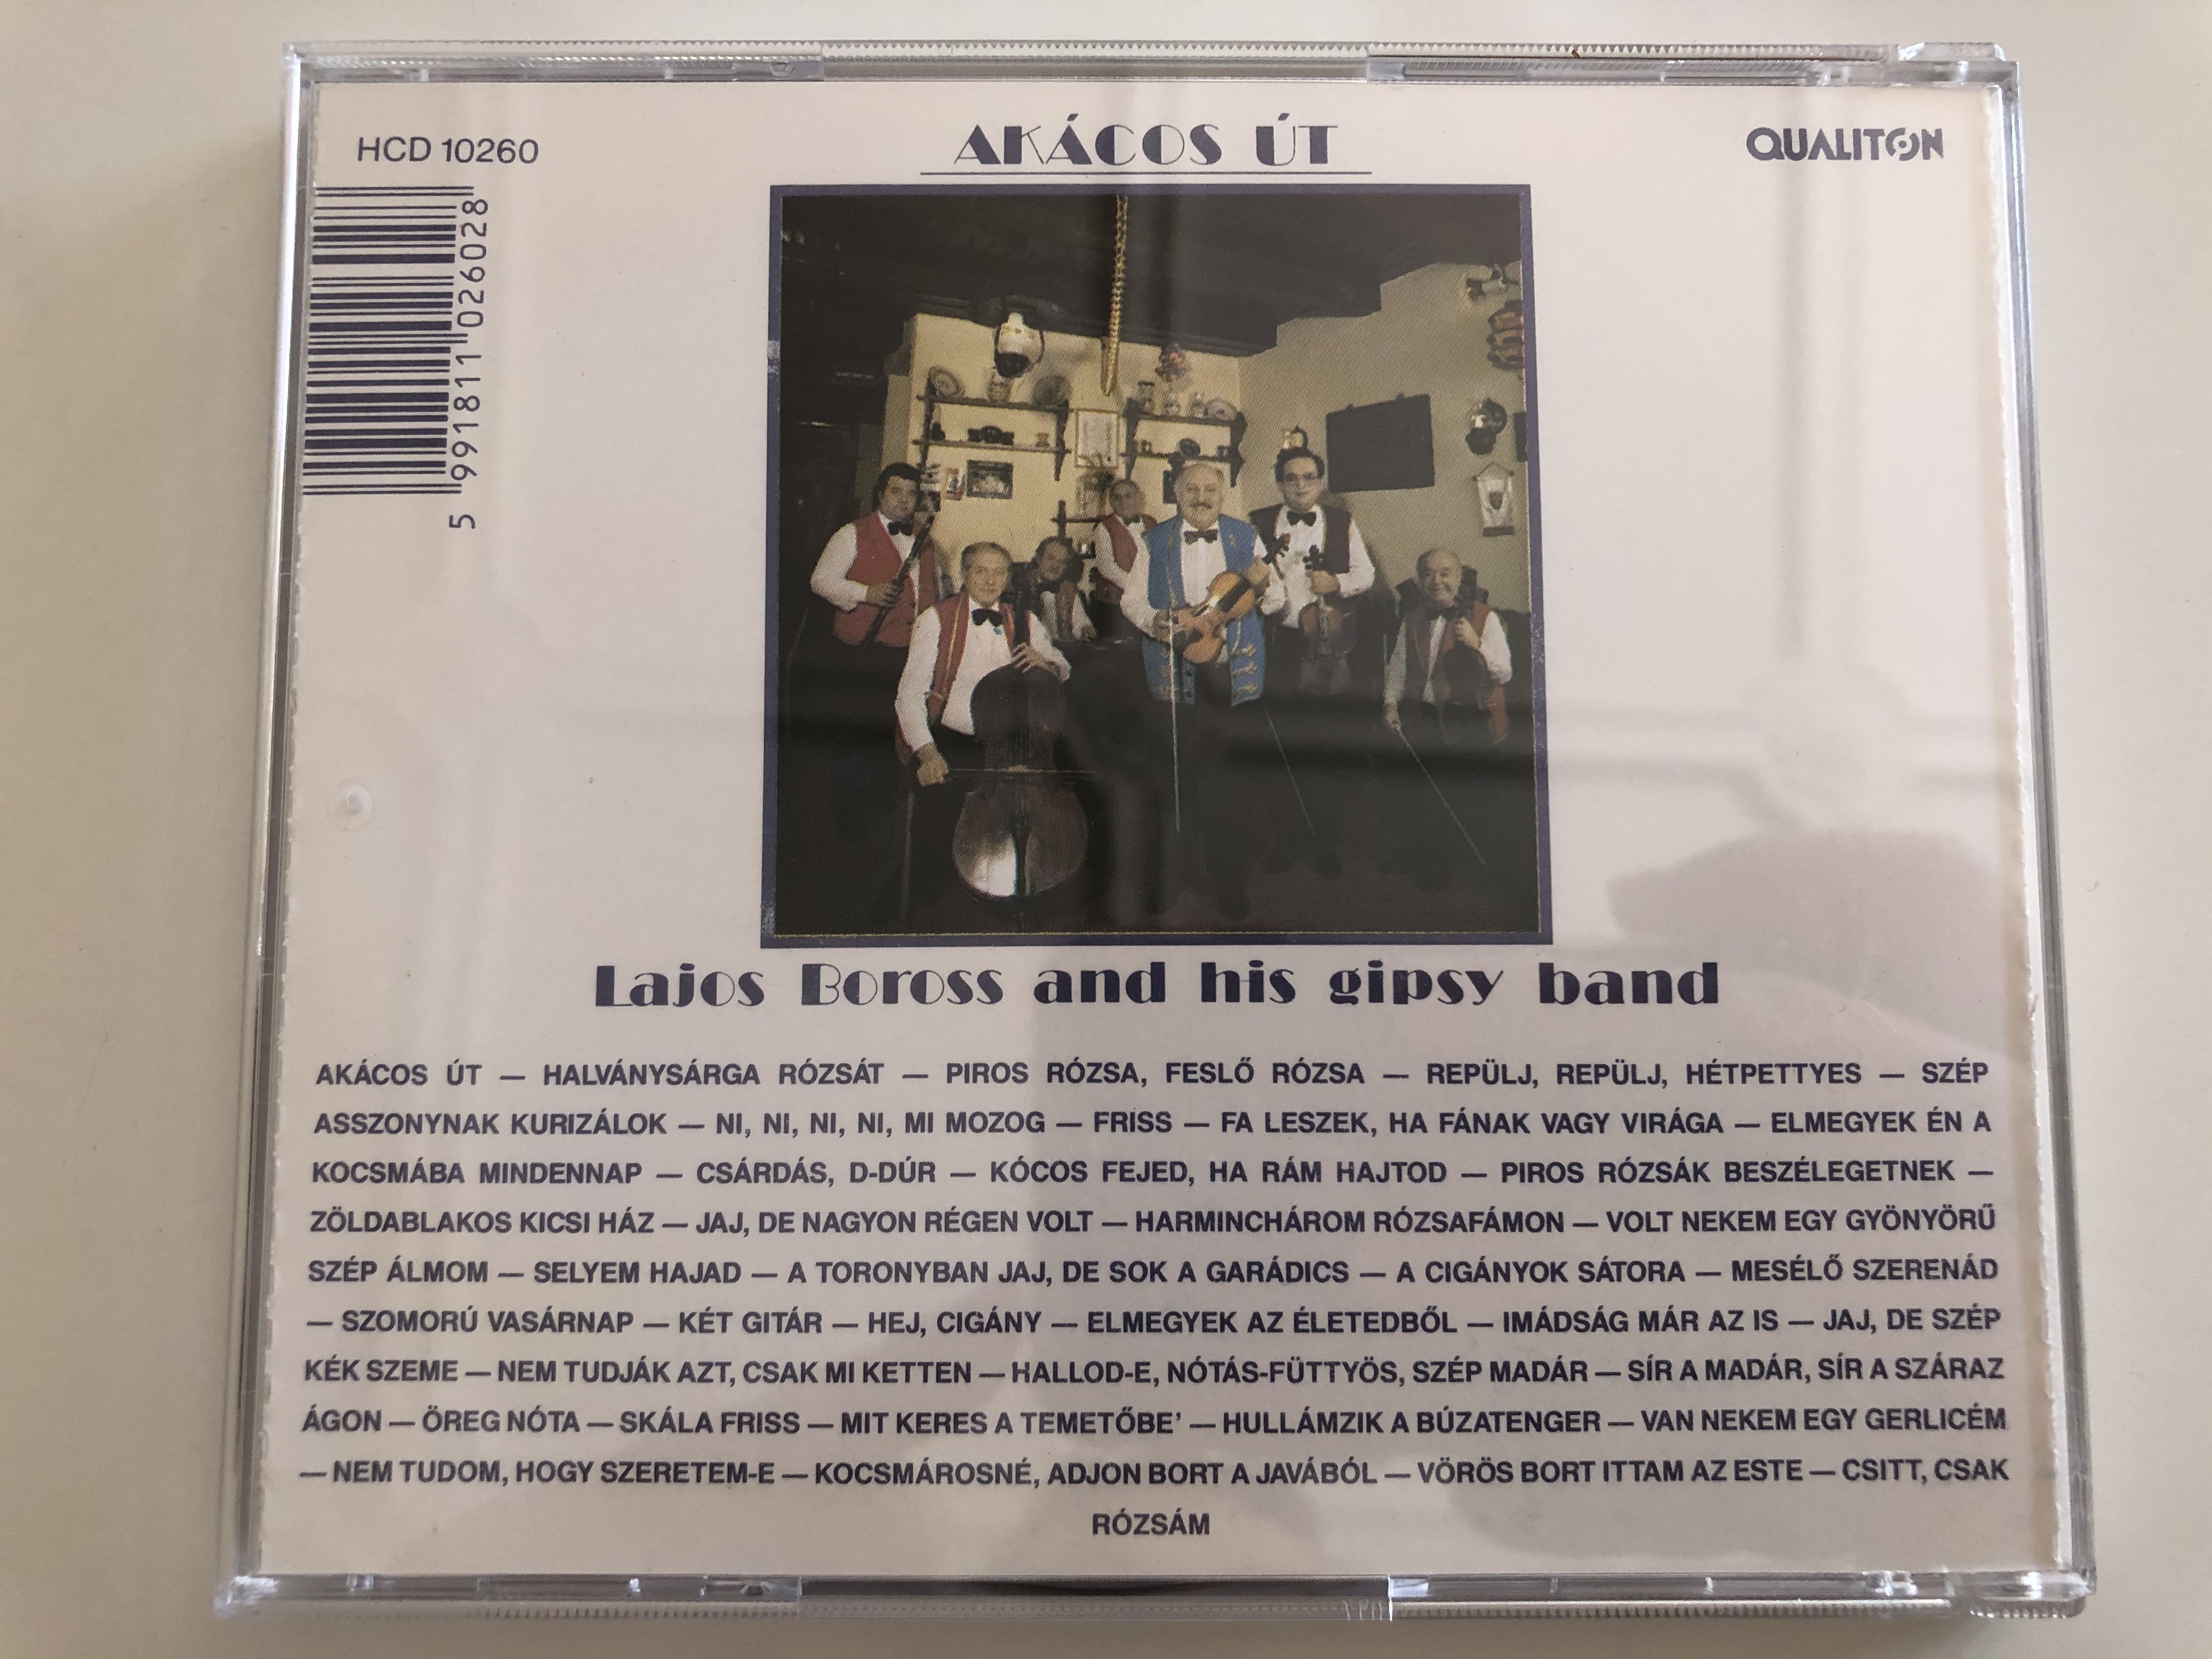 ak-cos-t-lajos-boross-and-his-gypsy-band-qualiton-audio-cd-1990-hcd-10260-6-.jpg